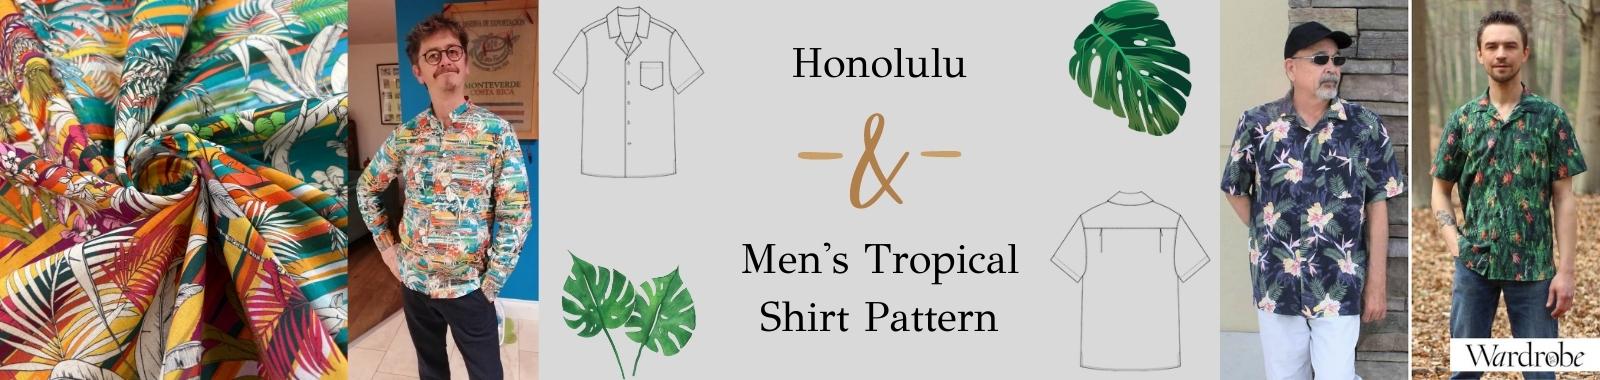 Honolulu_And_Mens_Tropical_Shirt_Pattern